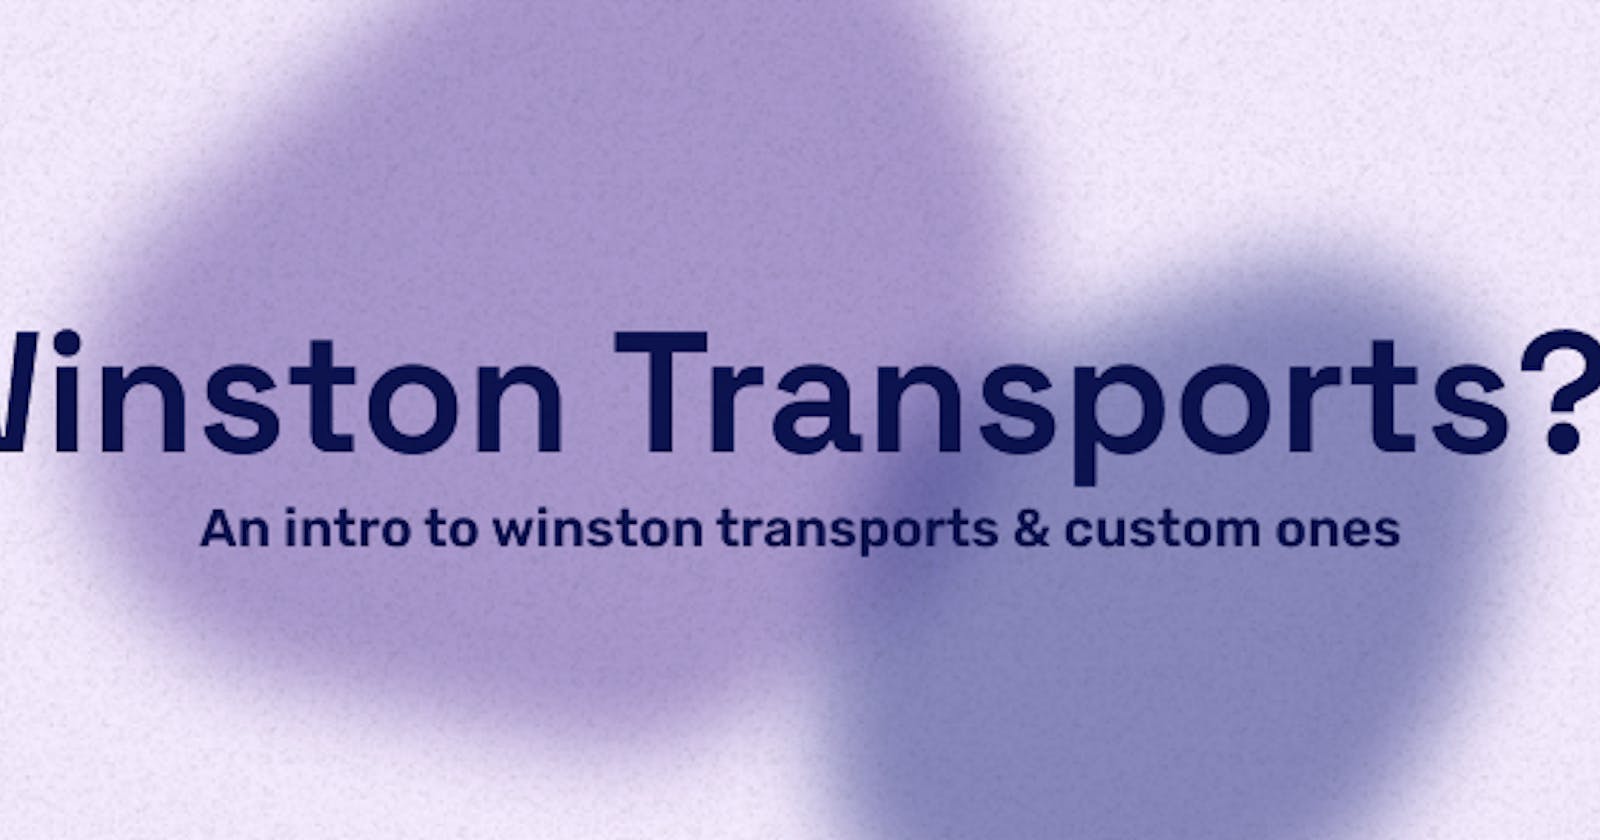 Winston Transports??